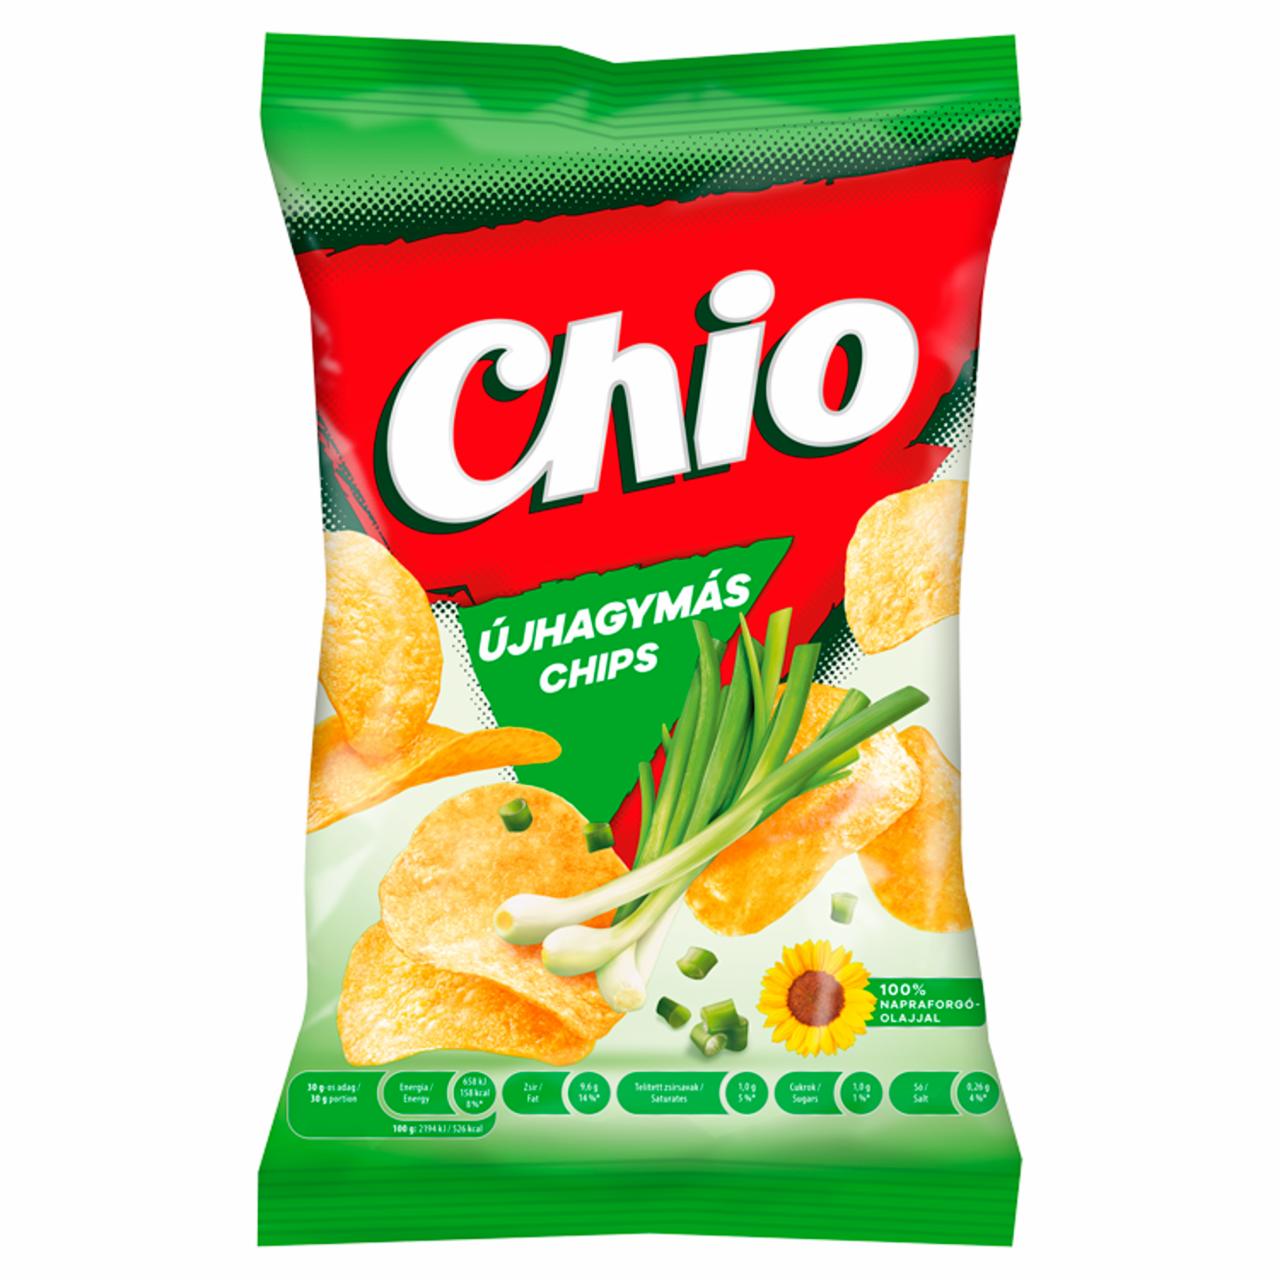 Képek - Chio újhagymás chips 60 g